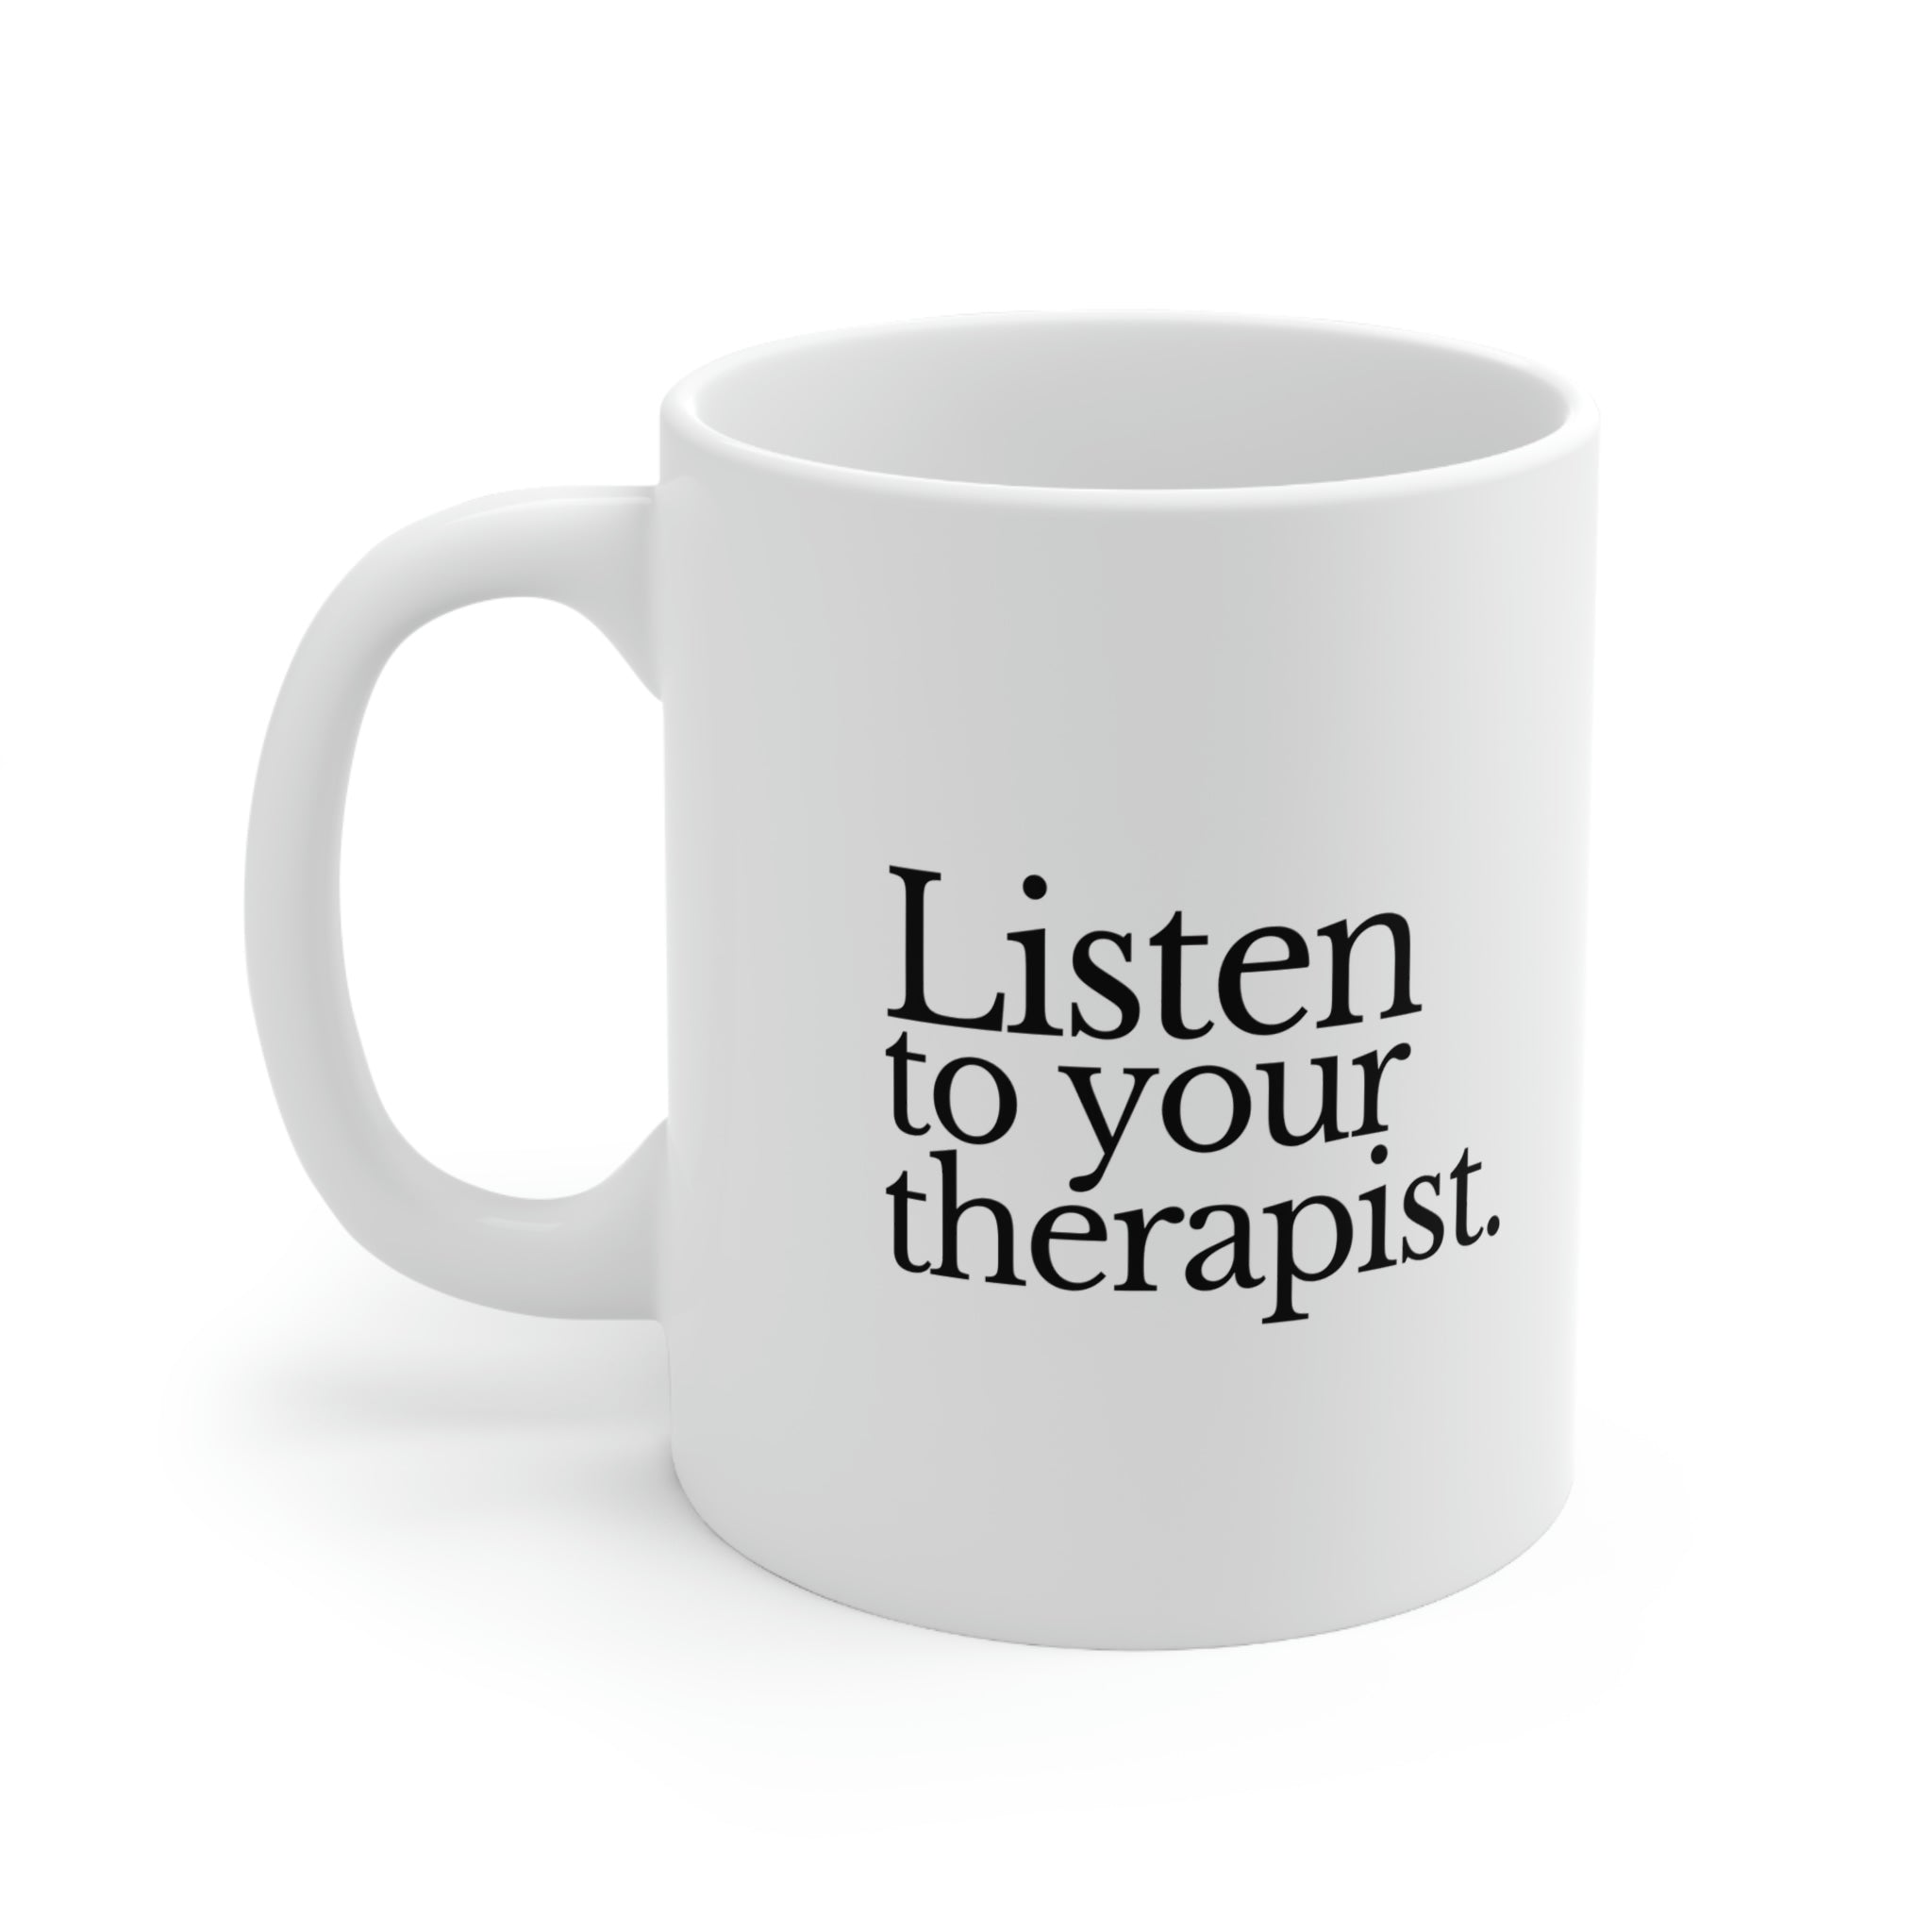 Listen To Your Therapist Ceramic Mug 11oz